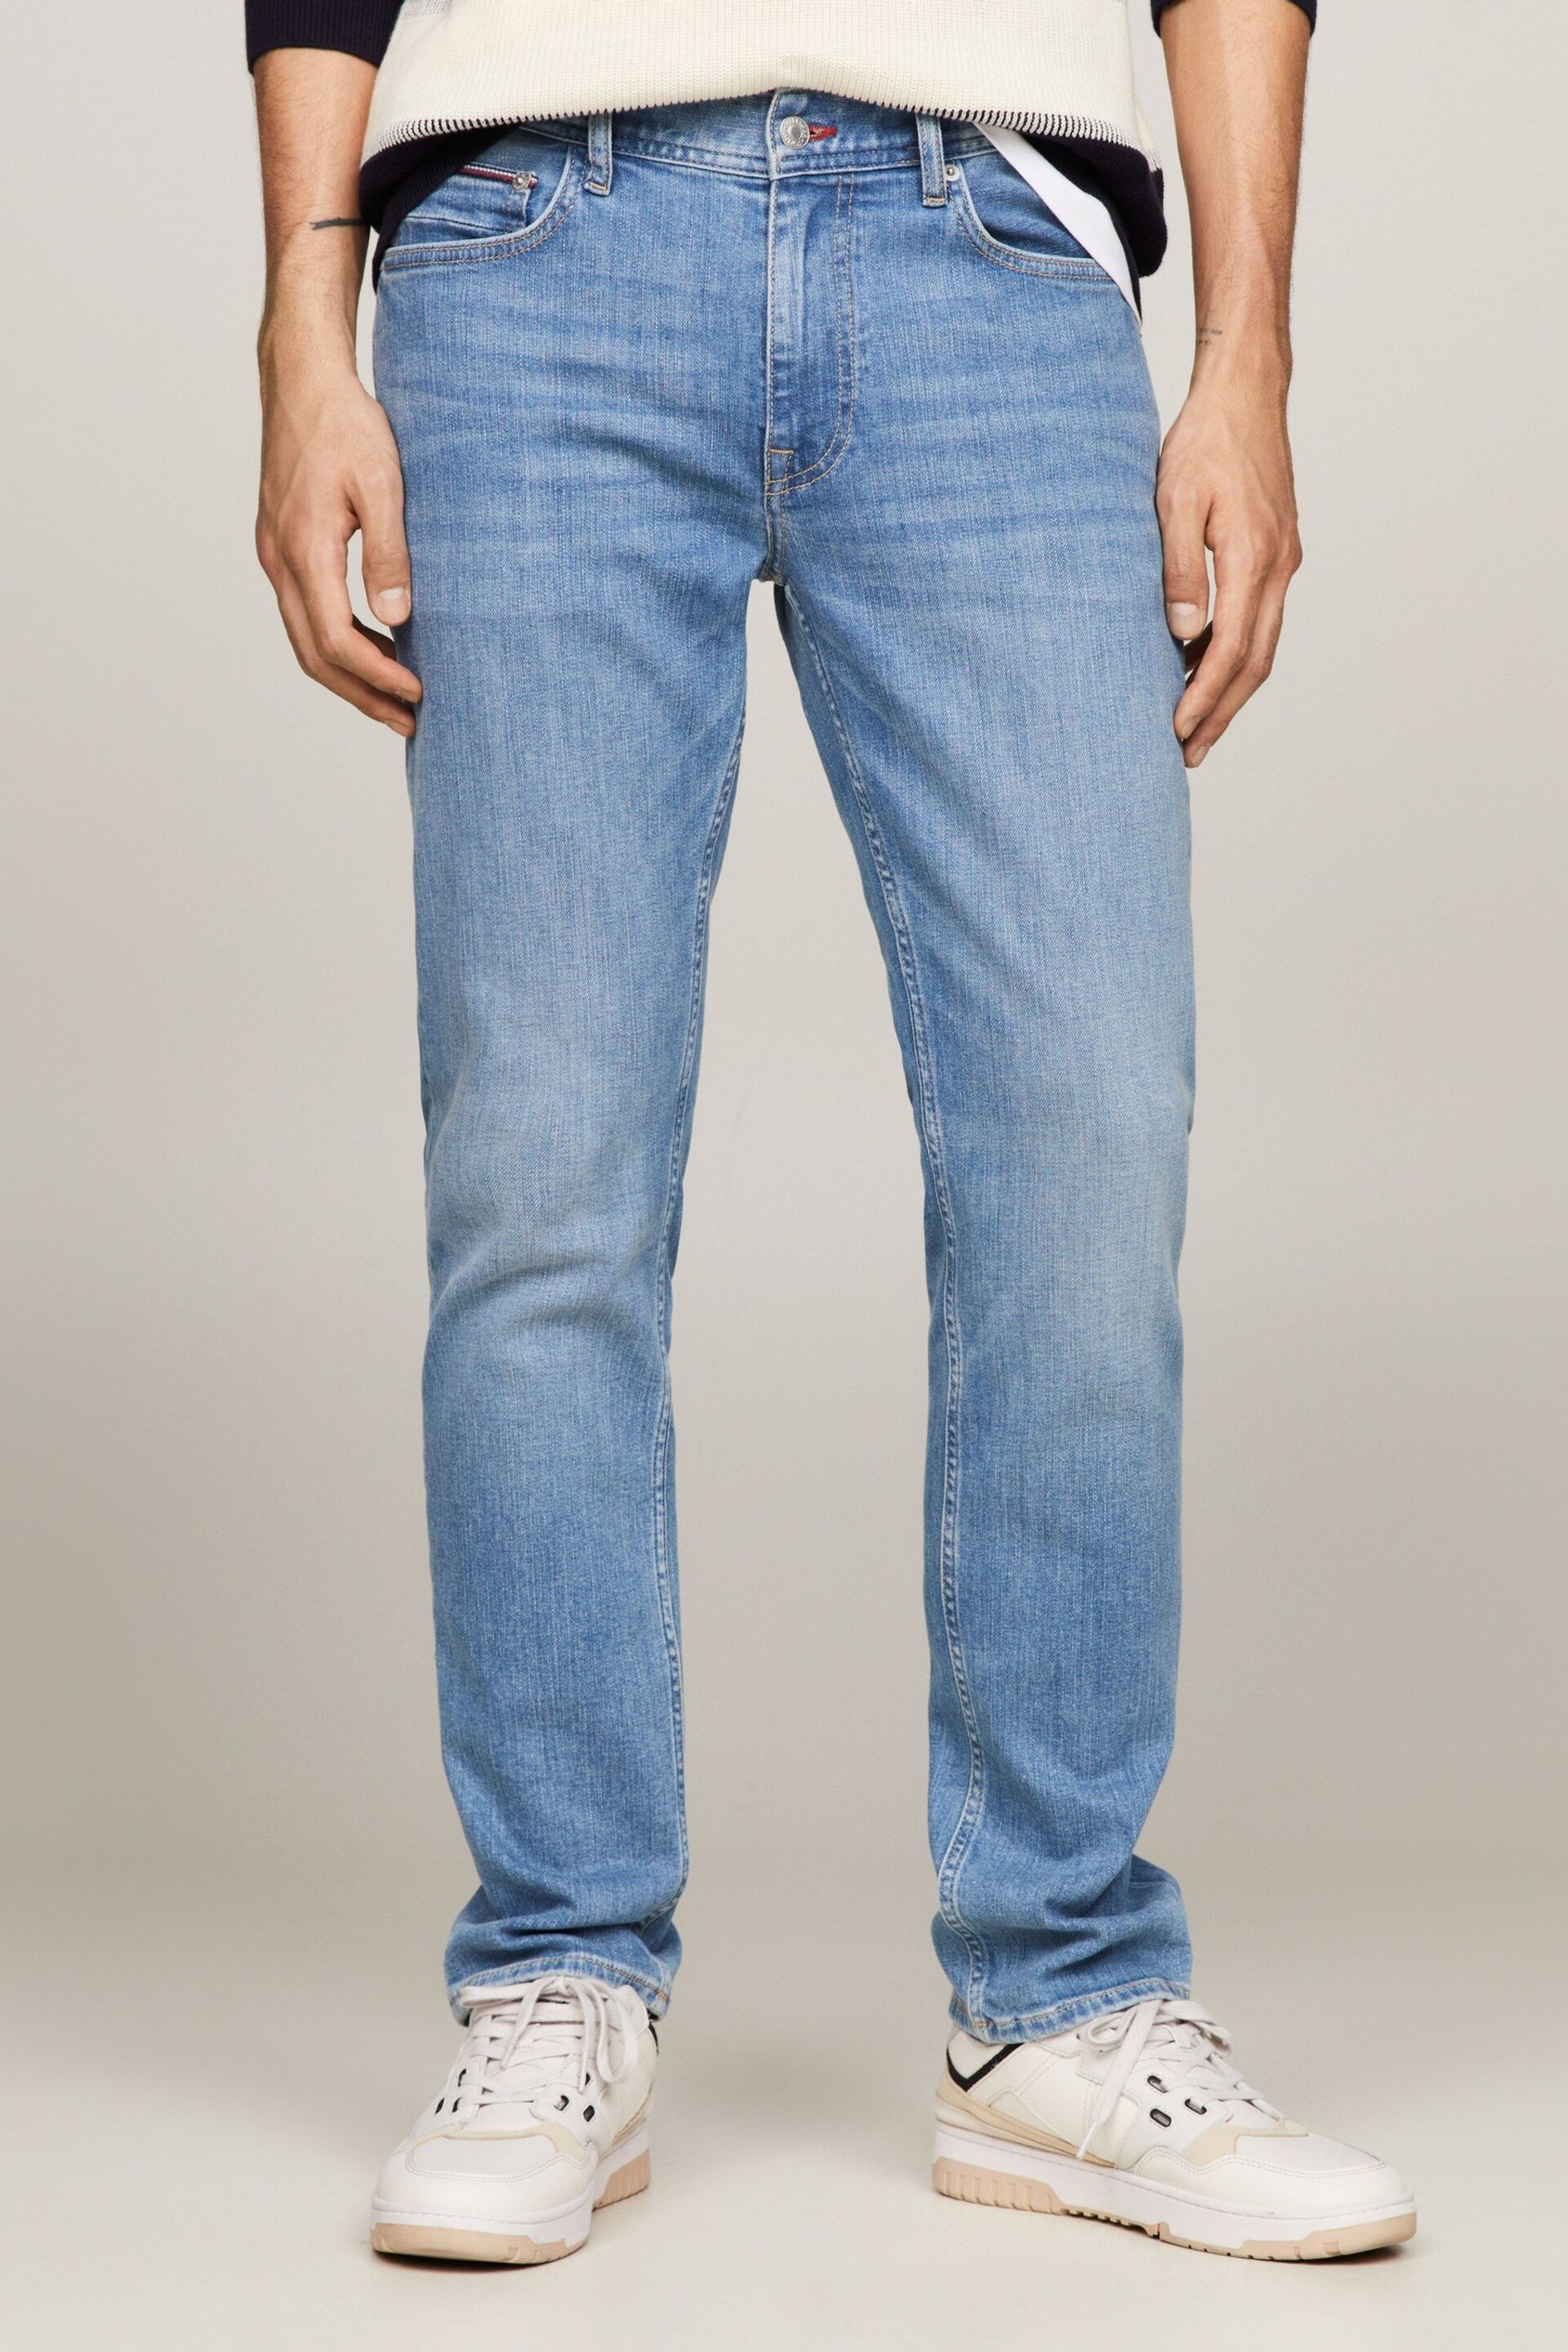 Tommy Hilfiger Blue Straight Denton Jeans - Image 1 of 5